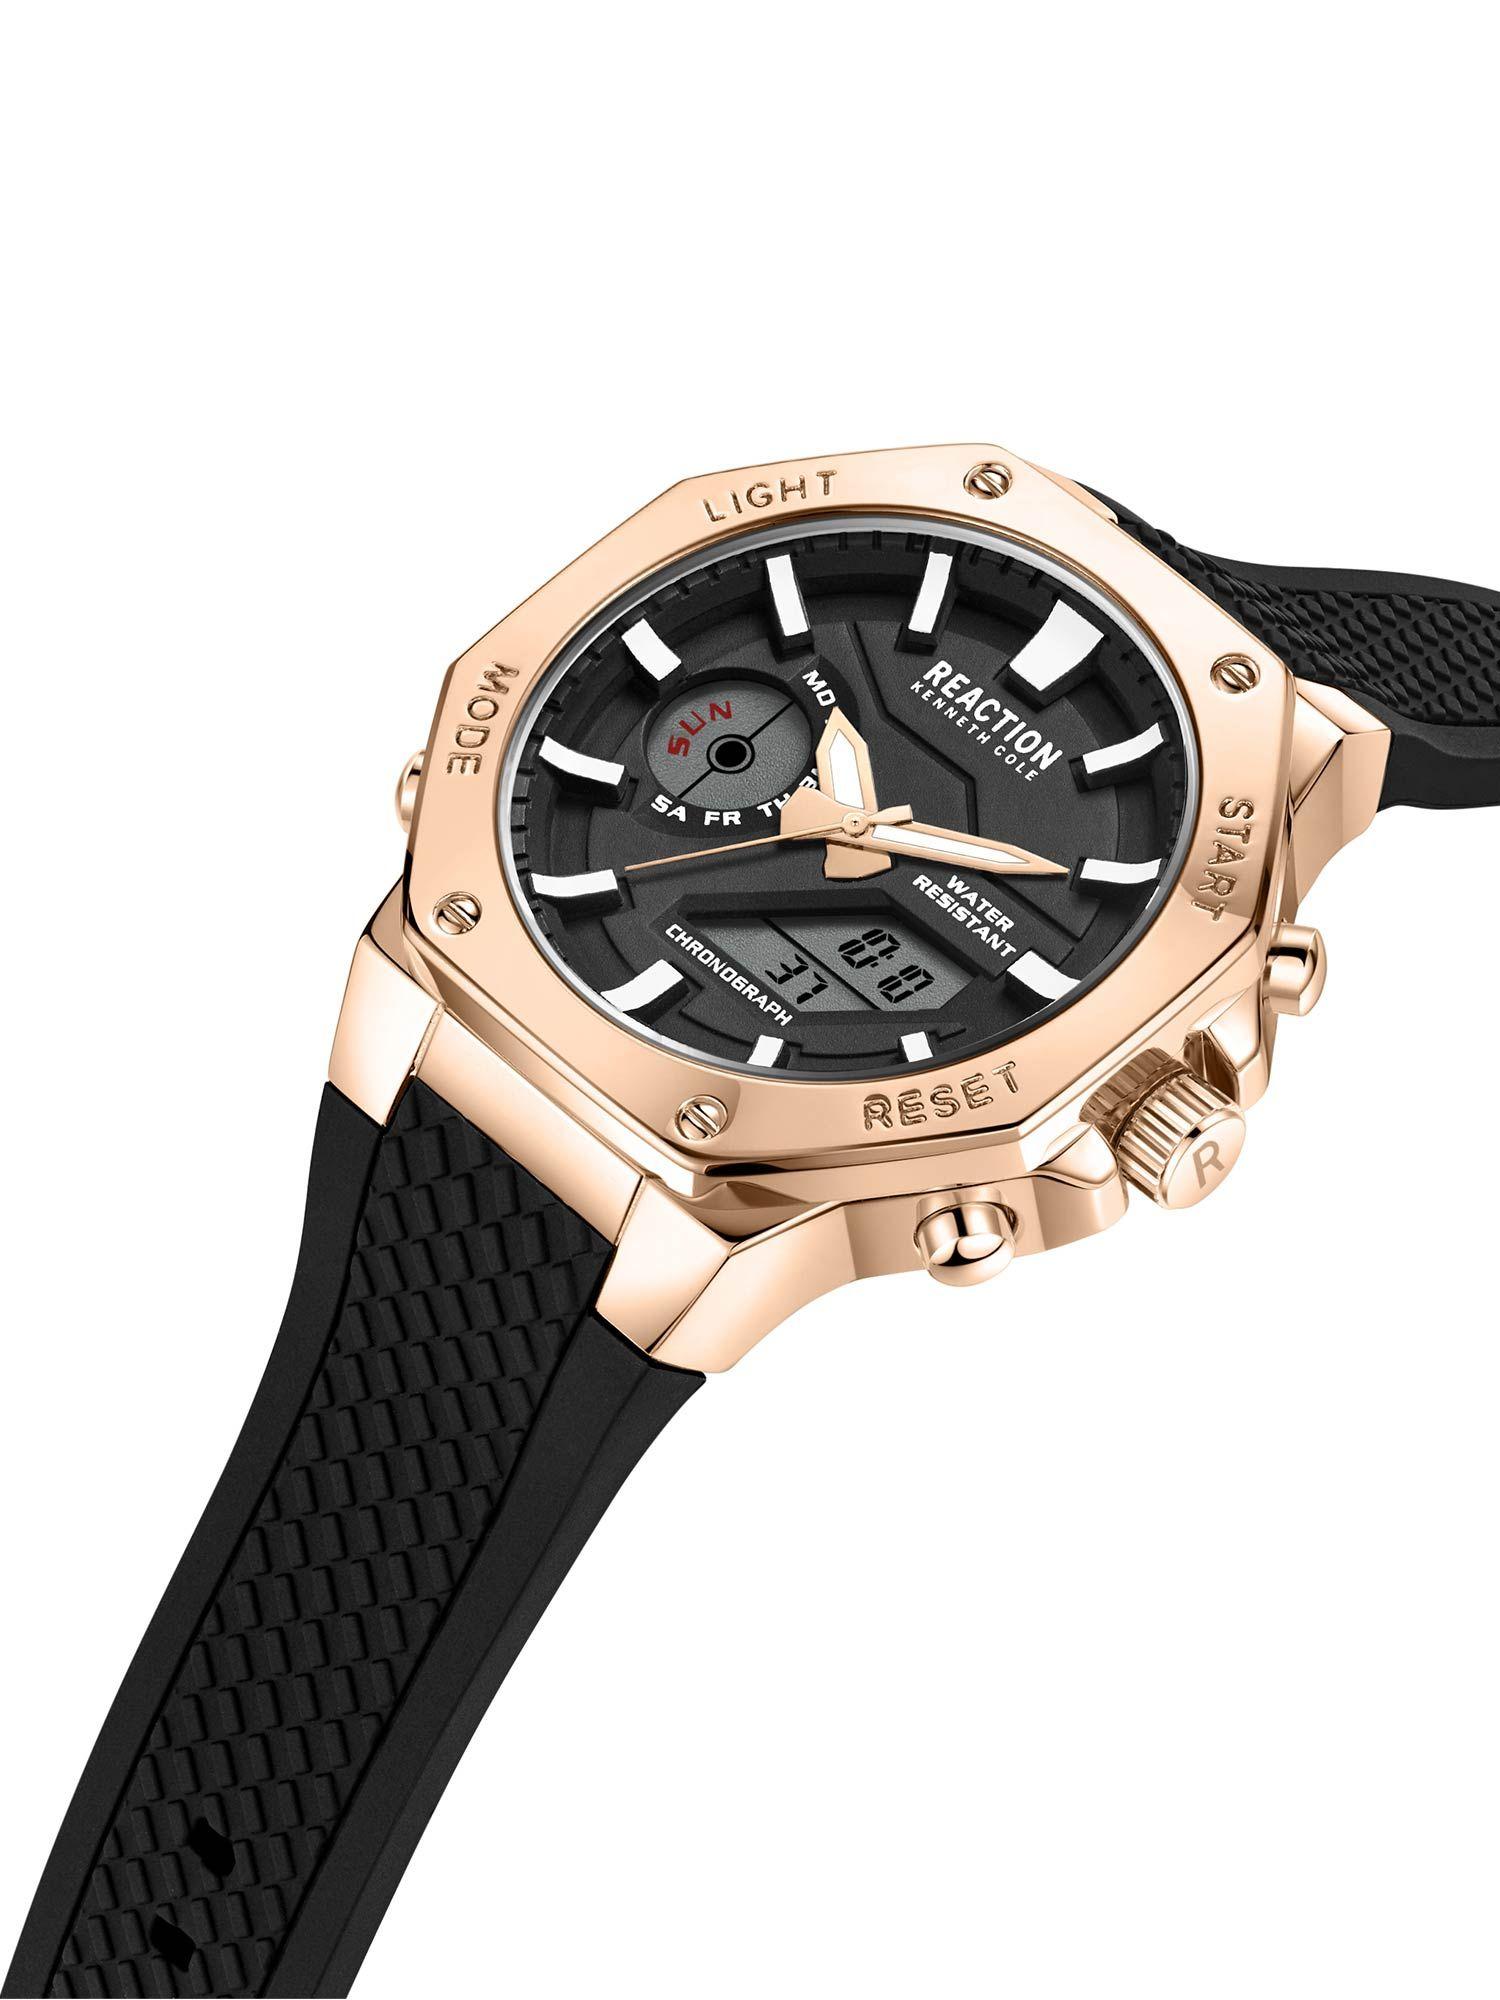 ana-digit black silicone strap sports wear watch for mens - krwgp2191704